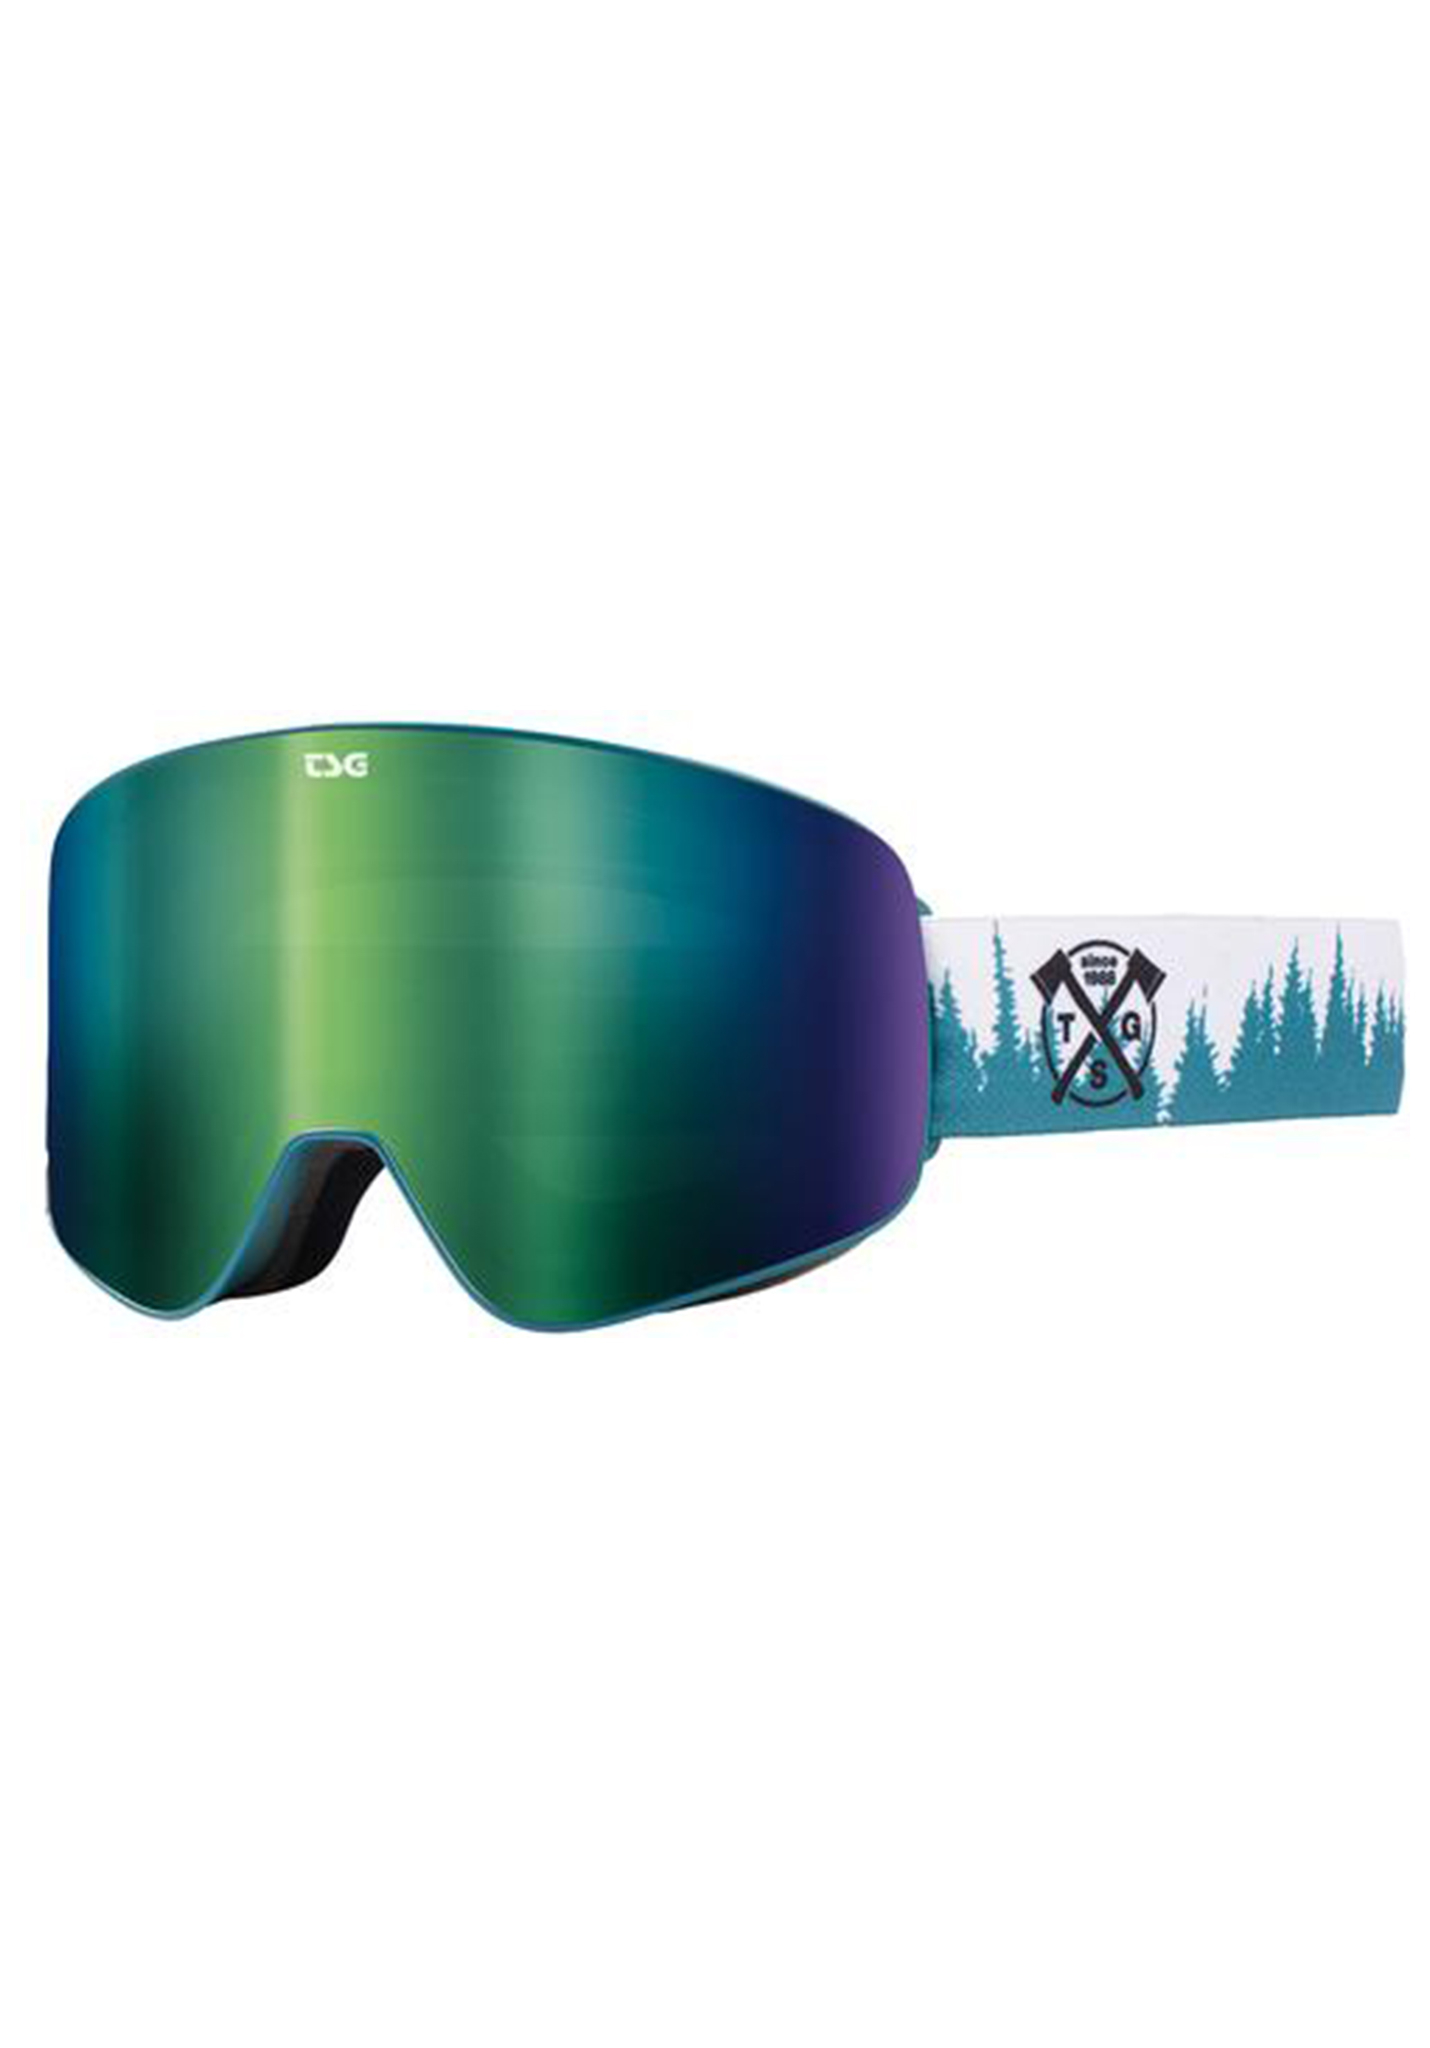 TSG Four S Snowboardbrillen bäume/grüner chrom One Size